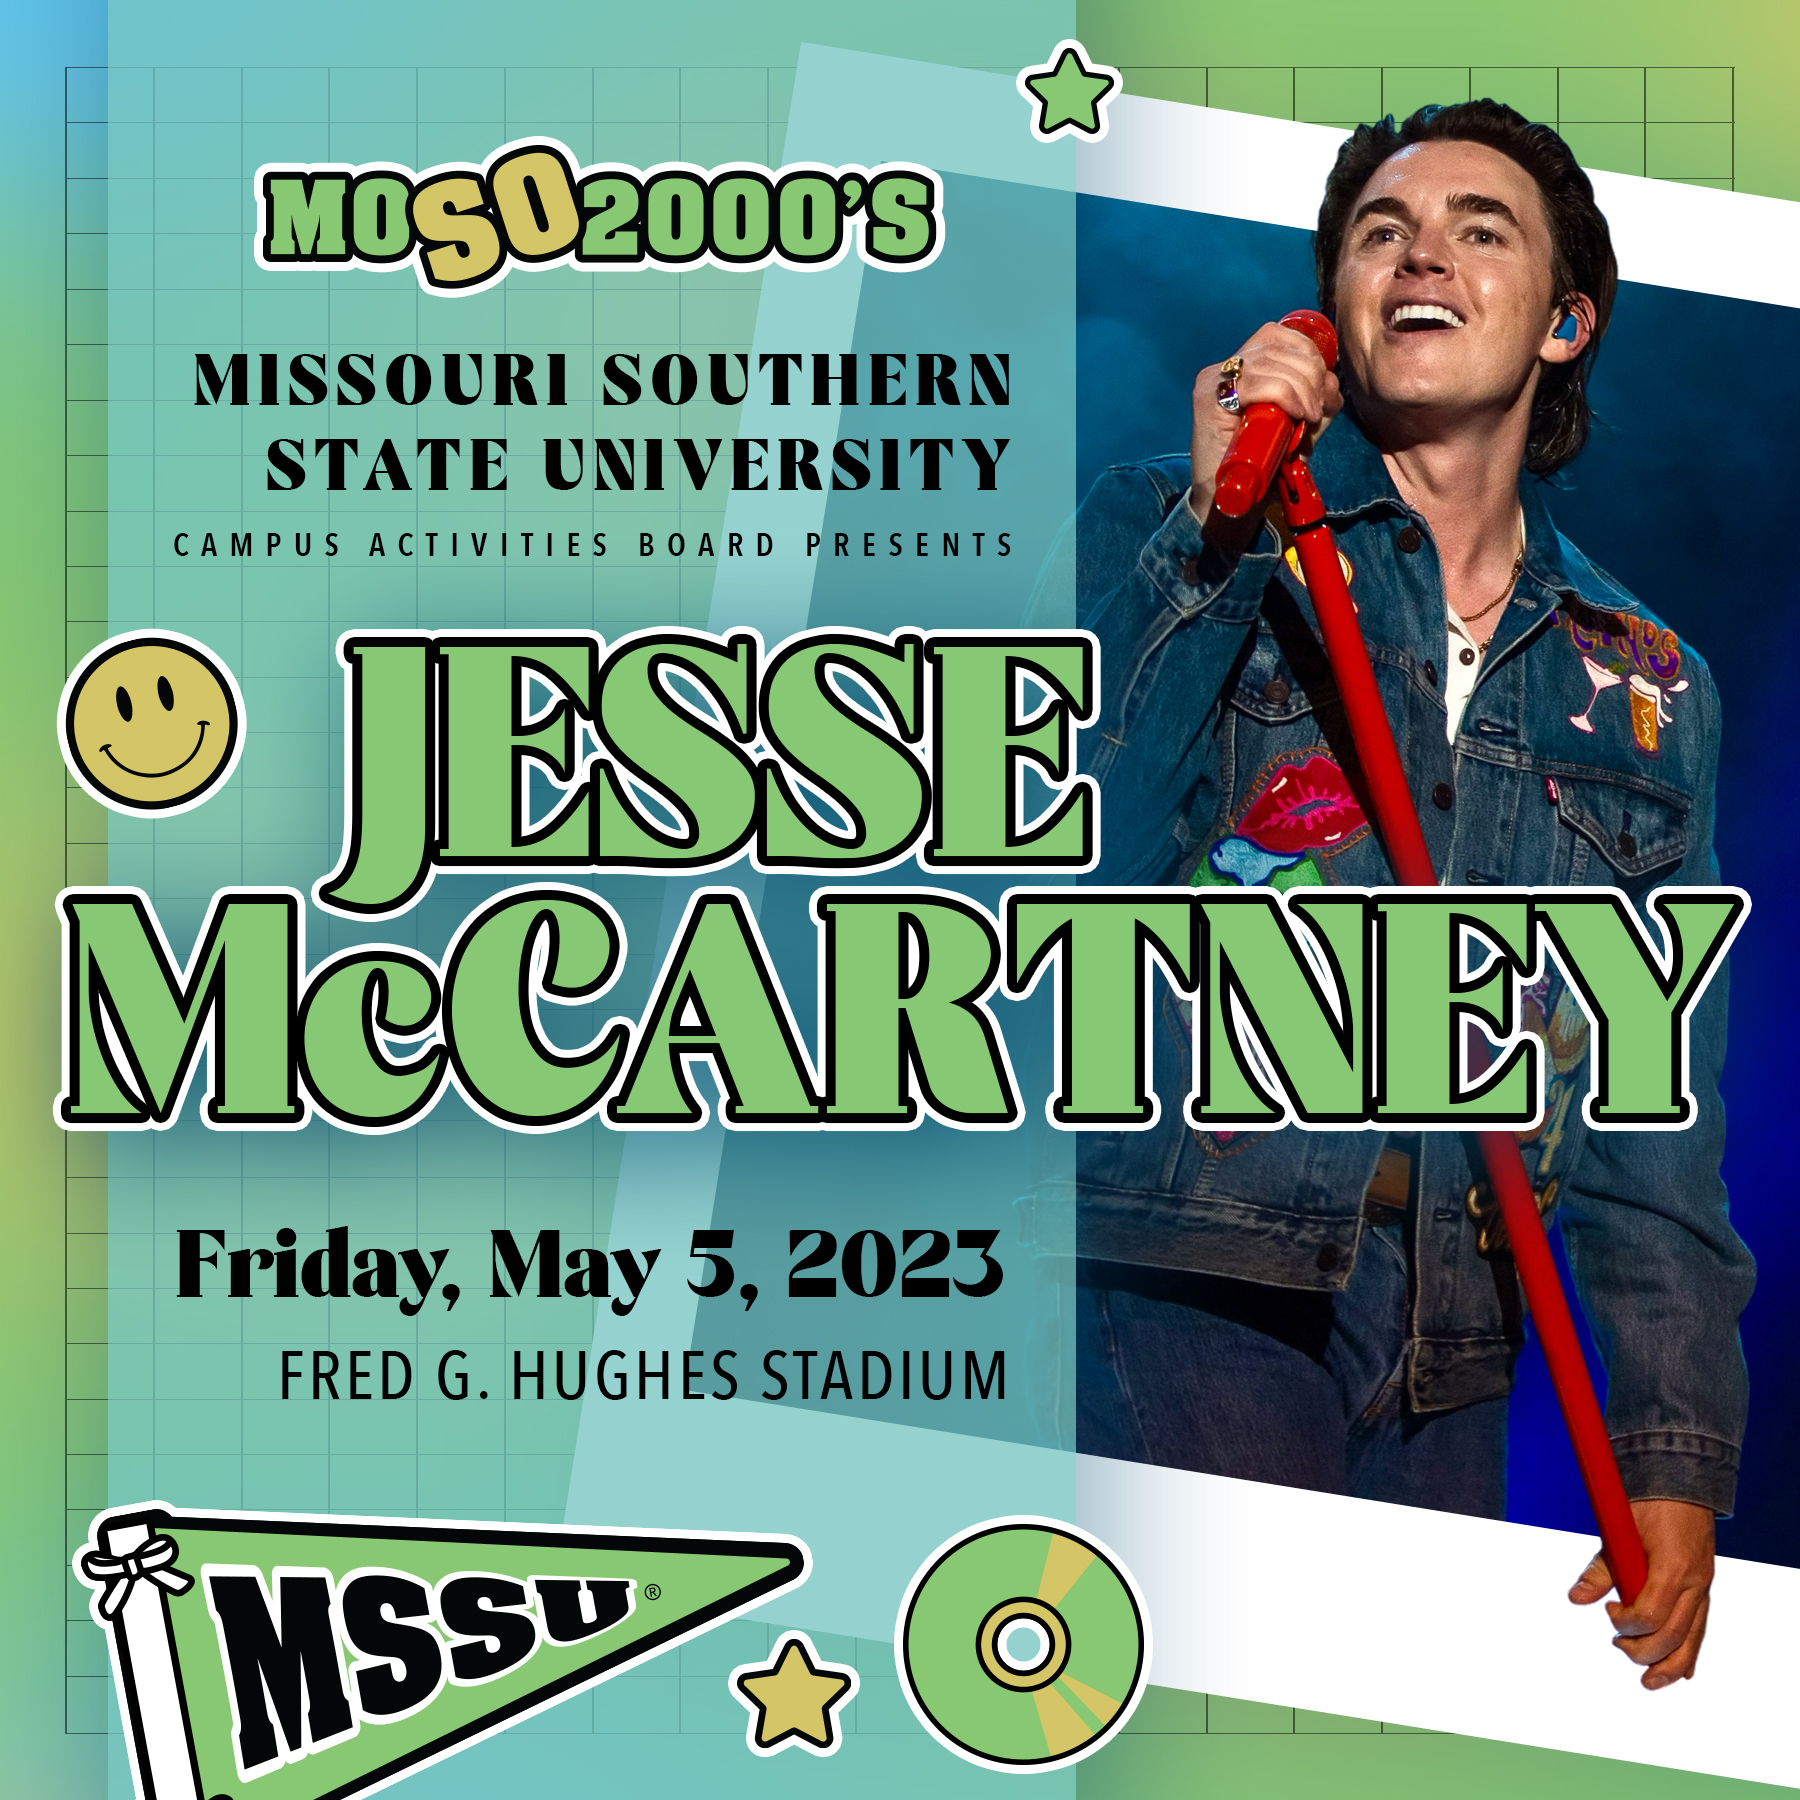 Inside Joplin Tickets on sale for Jesse McCartney concert at MSSU